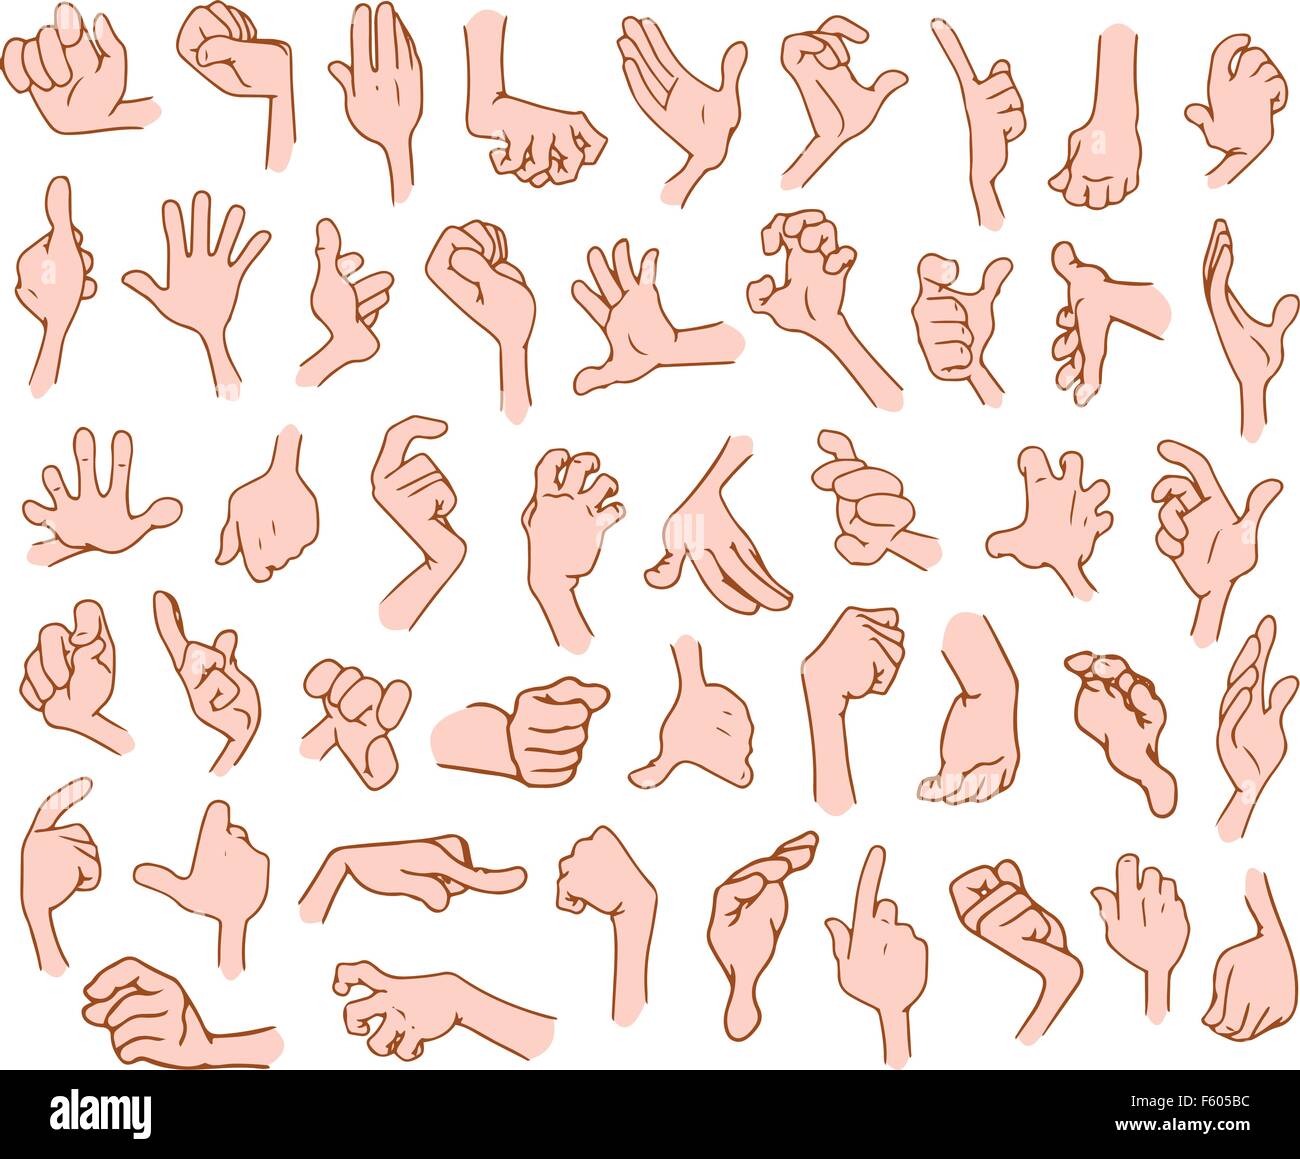 Vector illustrations pack of cartoon hands in various gestures Stock